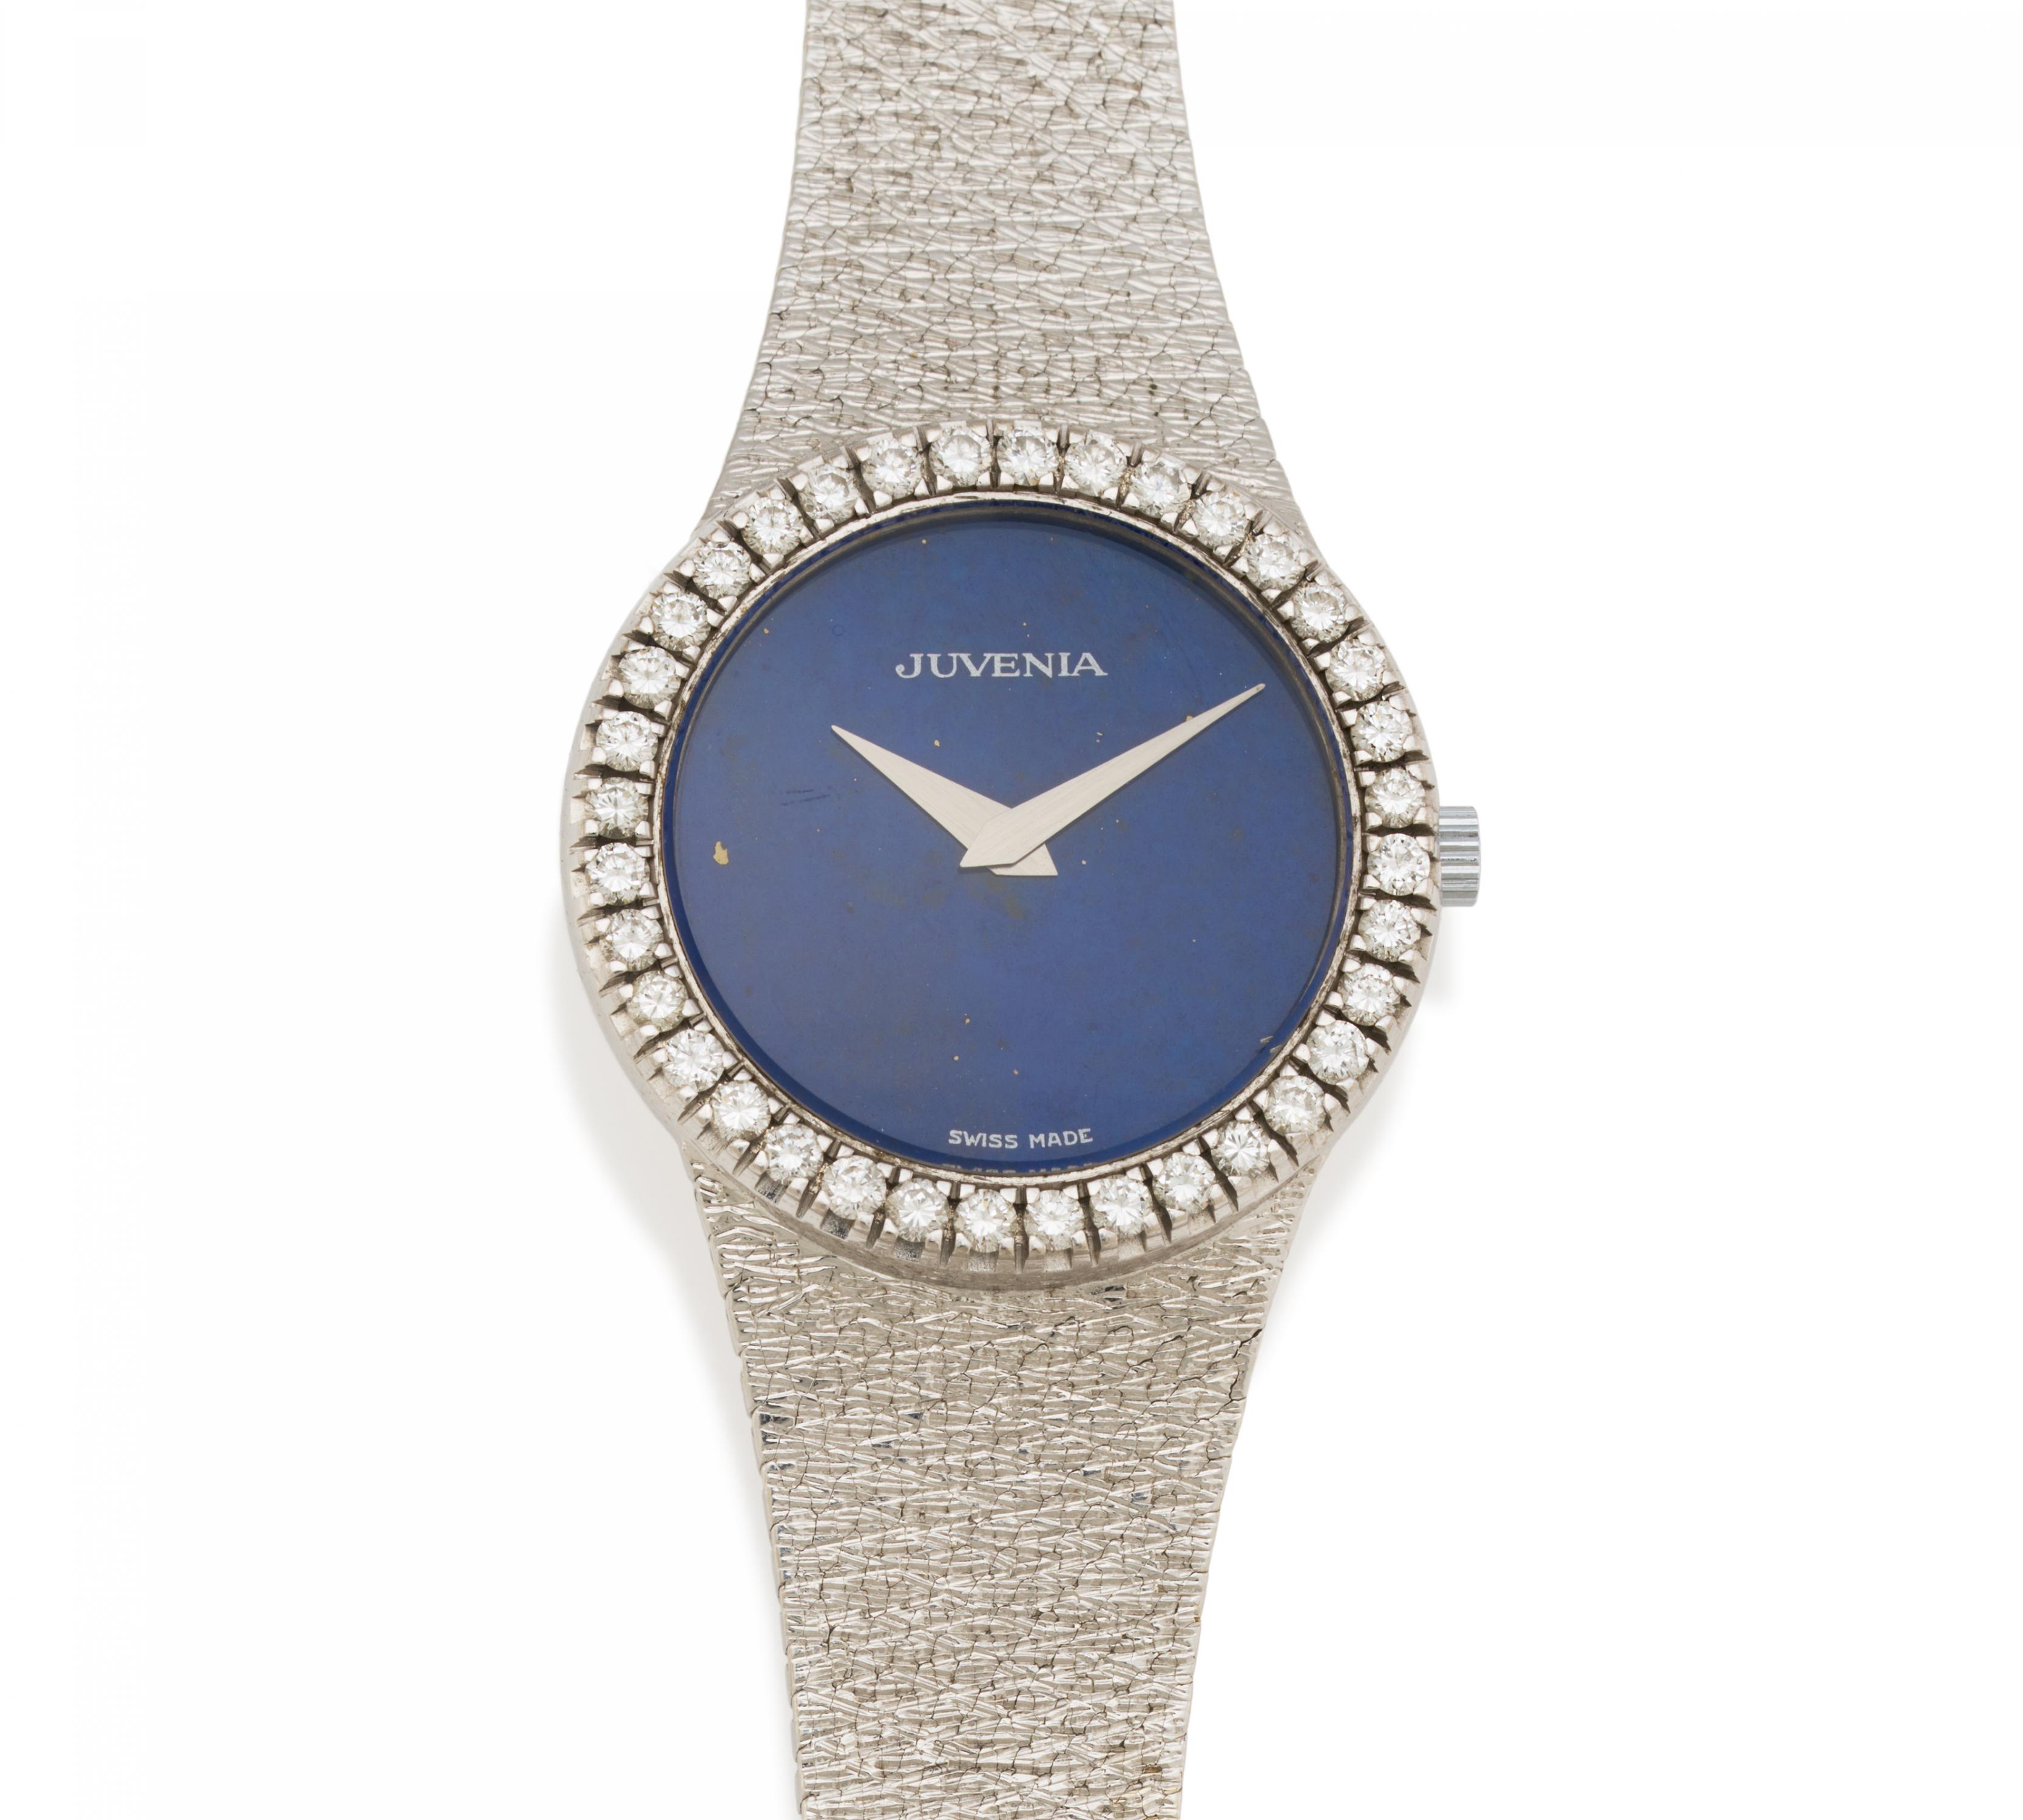 Juvenia - Armbanduhr, 73506-3, Van Ham Kunstauktionen